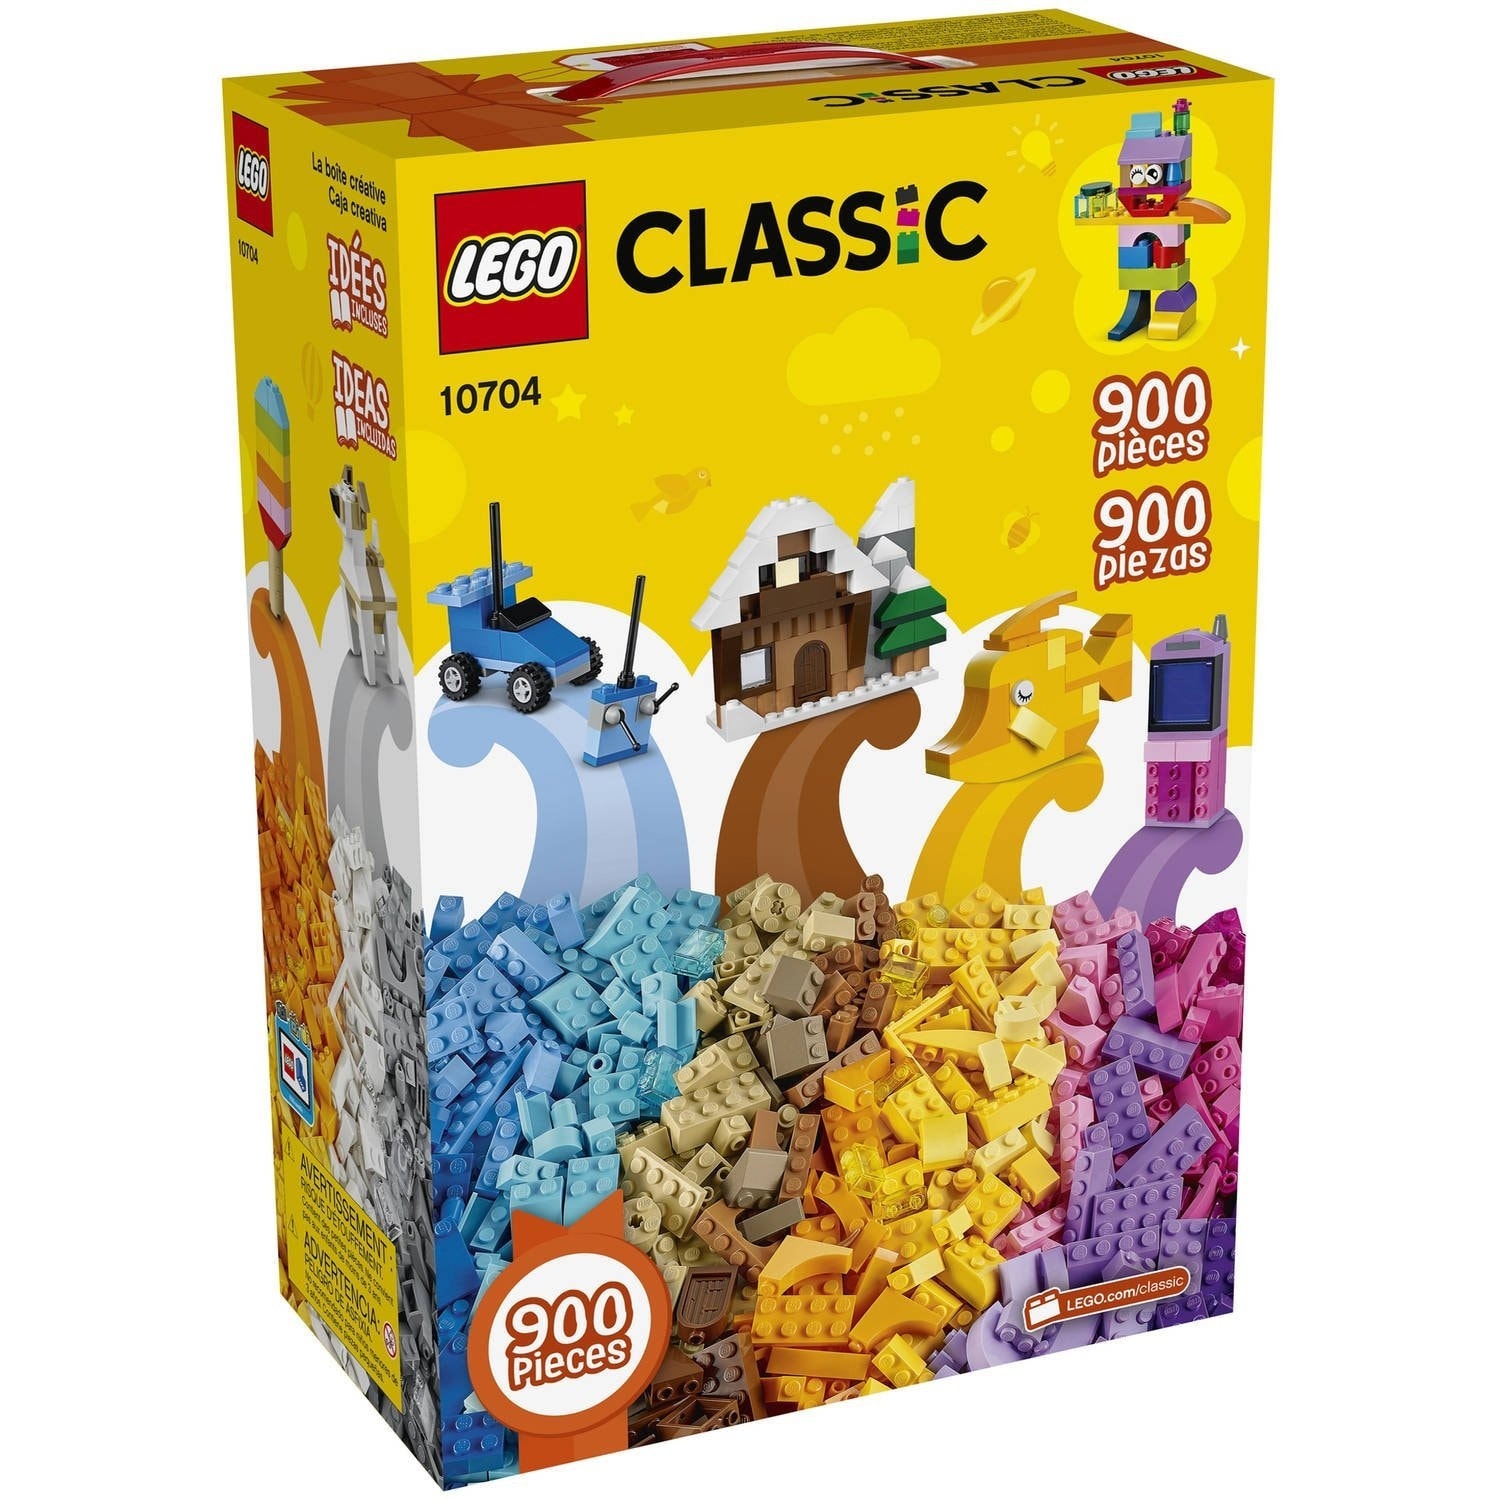 900 piece lego set